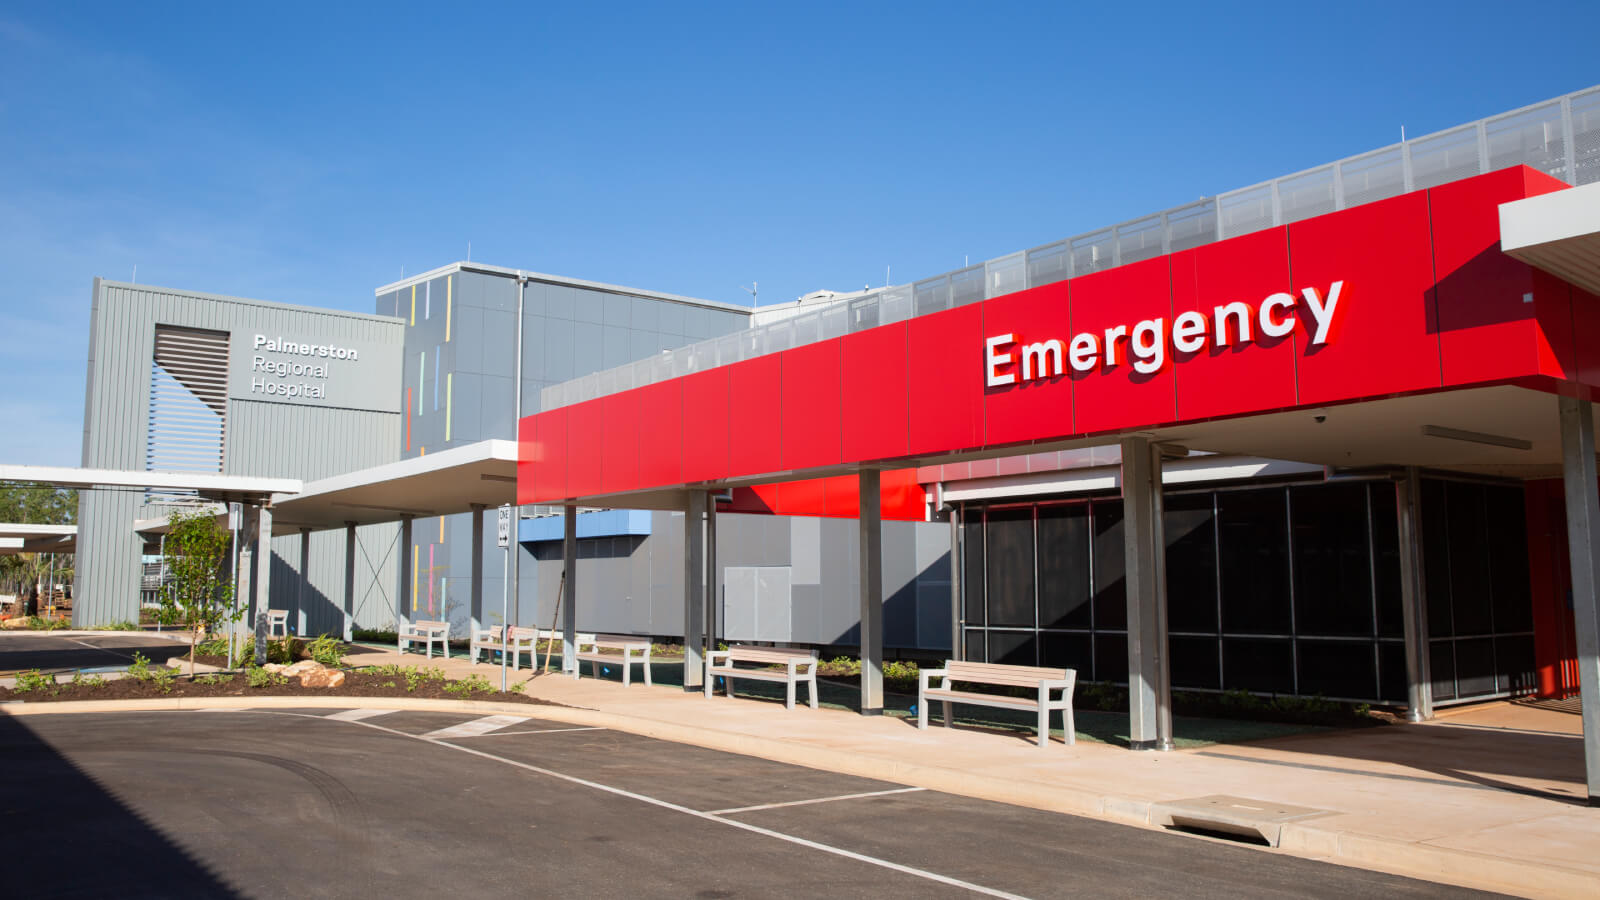 Palmerston Regional Hospital